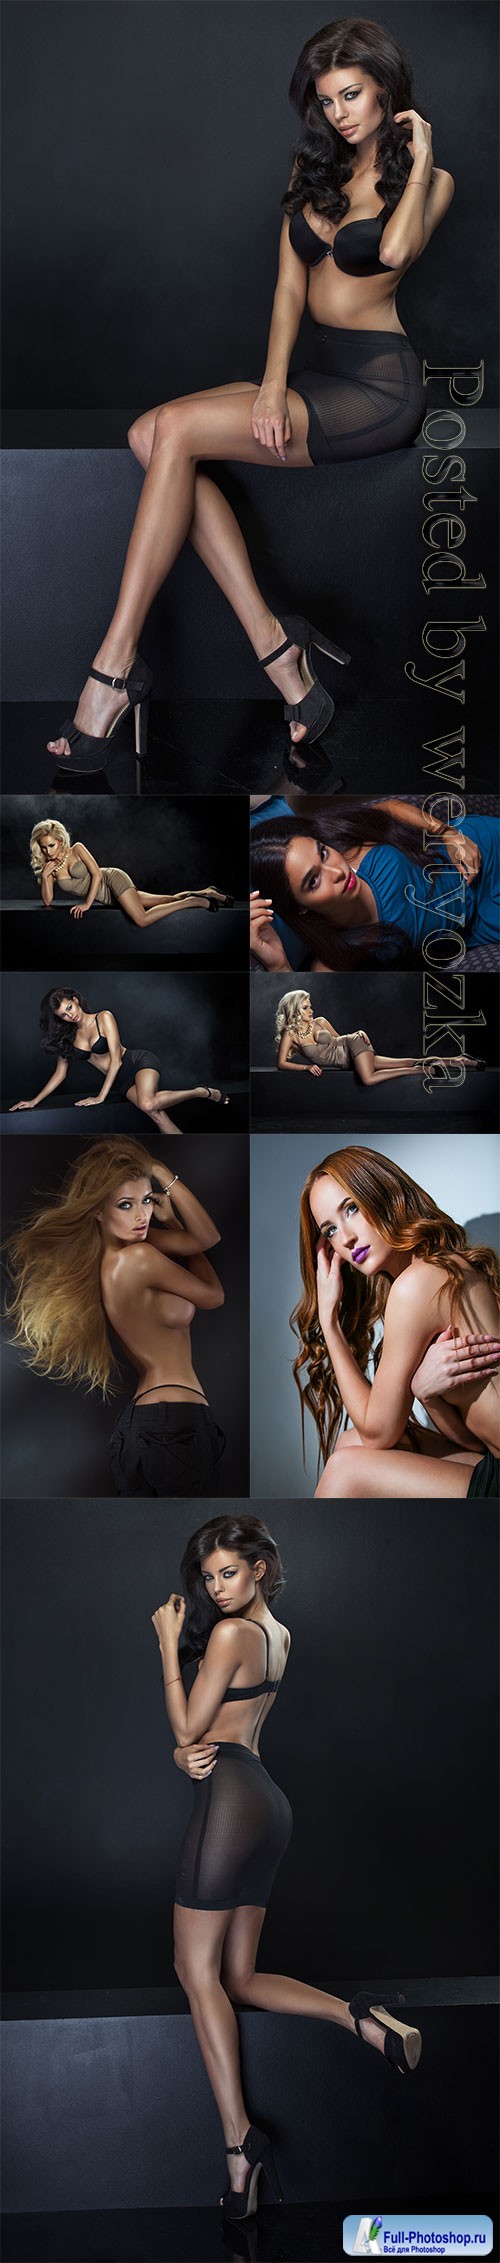 Luxury women in lingerie posing stock photo vol 22